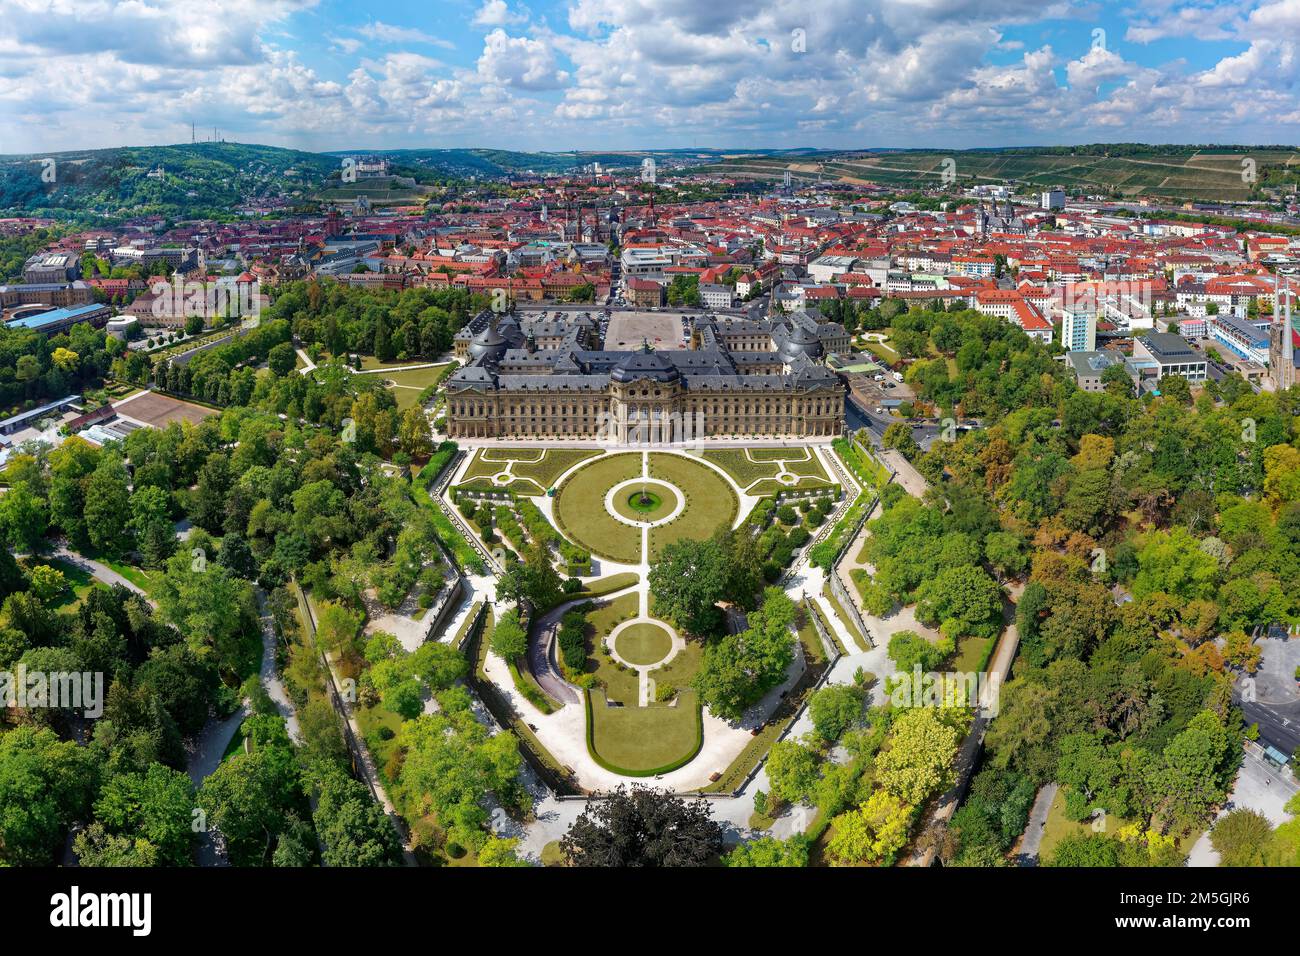 Veduta aerea Wuerzburg Residence con giardino di corte, barocco, giardino barocco, 18th ° secolo indietro Wuerzburg Altstdt, Wuerzburg alta Franconia Foto Stock